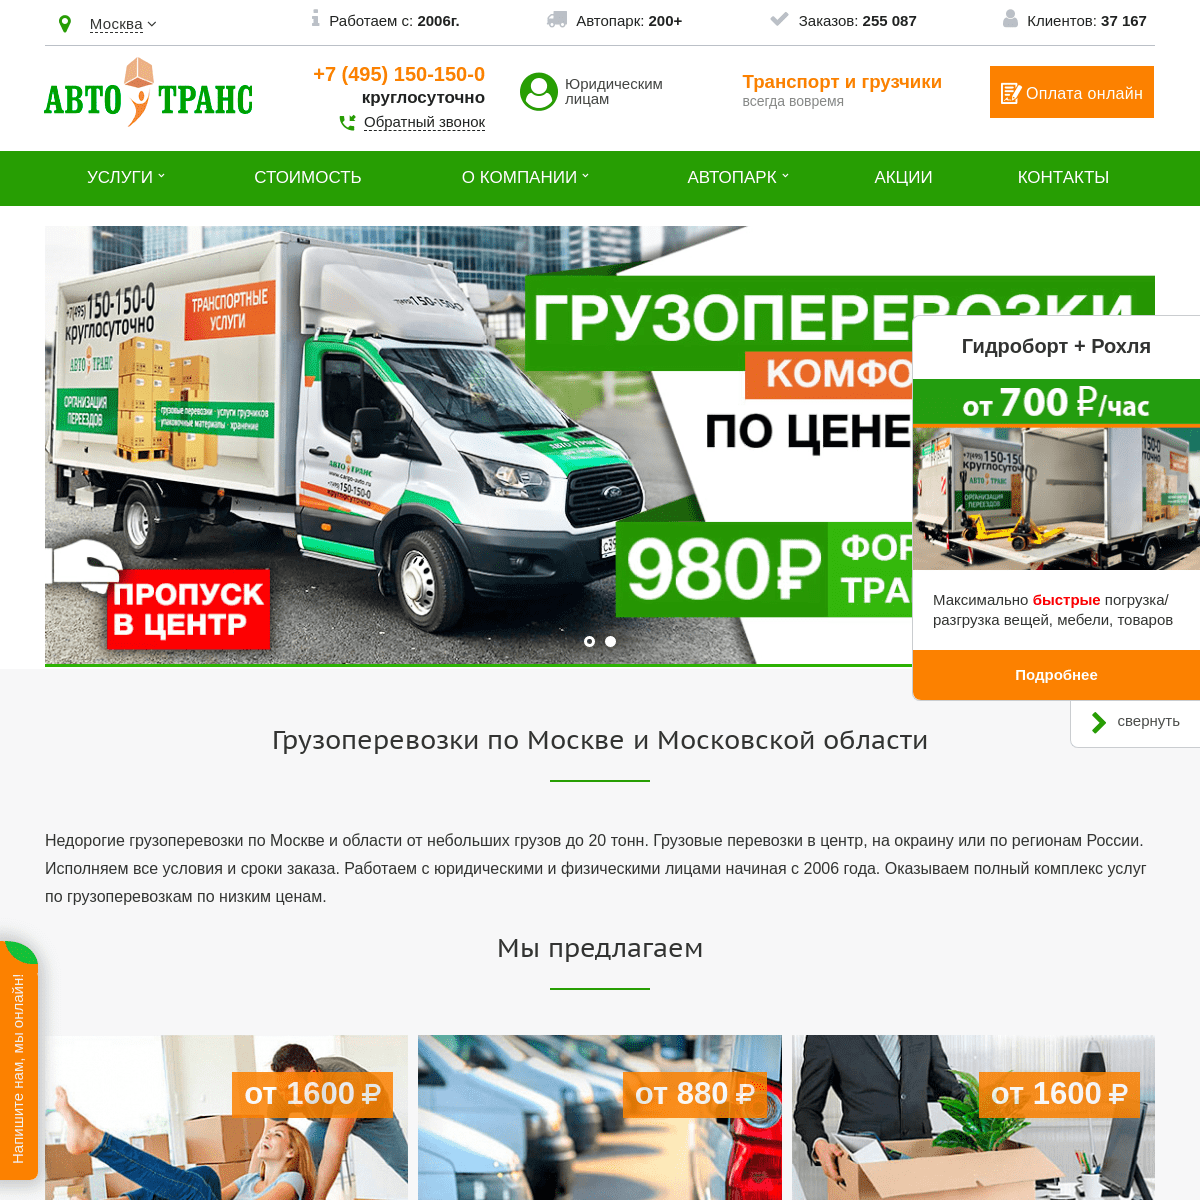 A complete backup of cargo-avto.ru